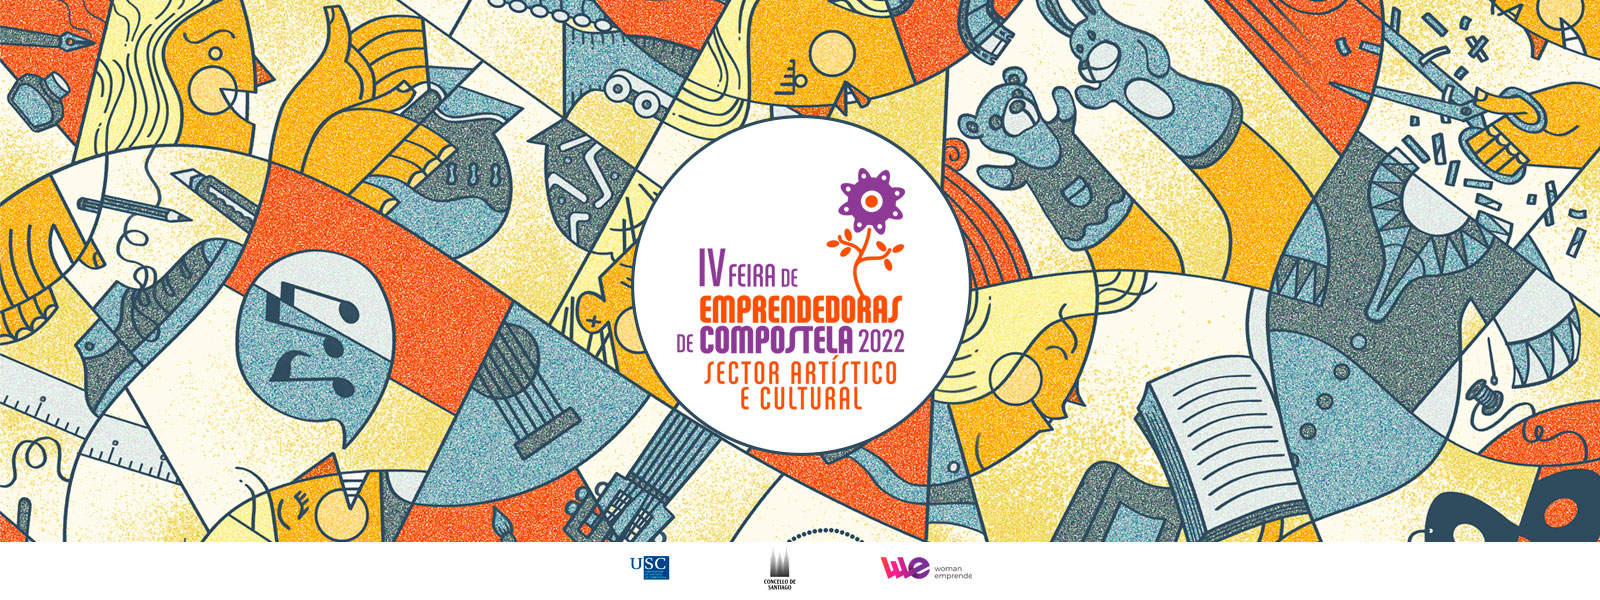 IV Feira de Emprendedoras de Compostela: o sector artístico e cultural